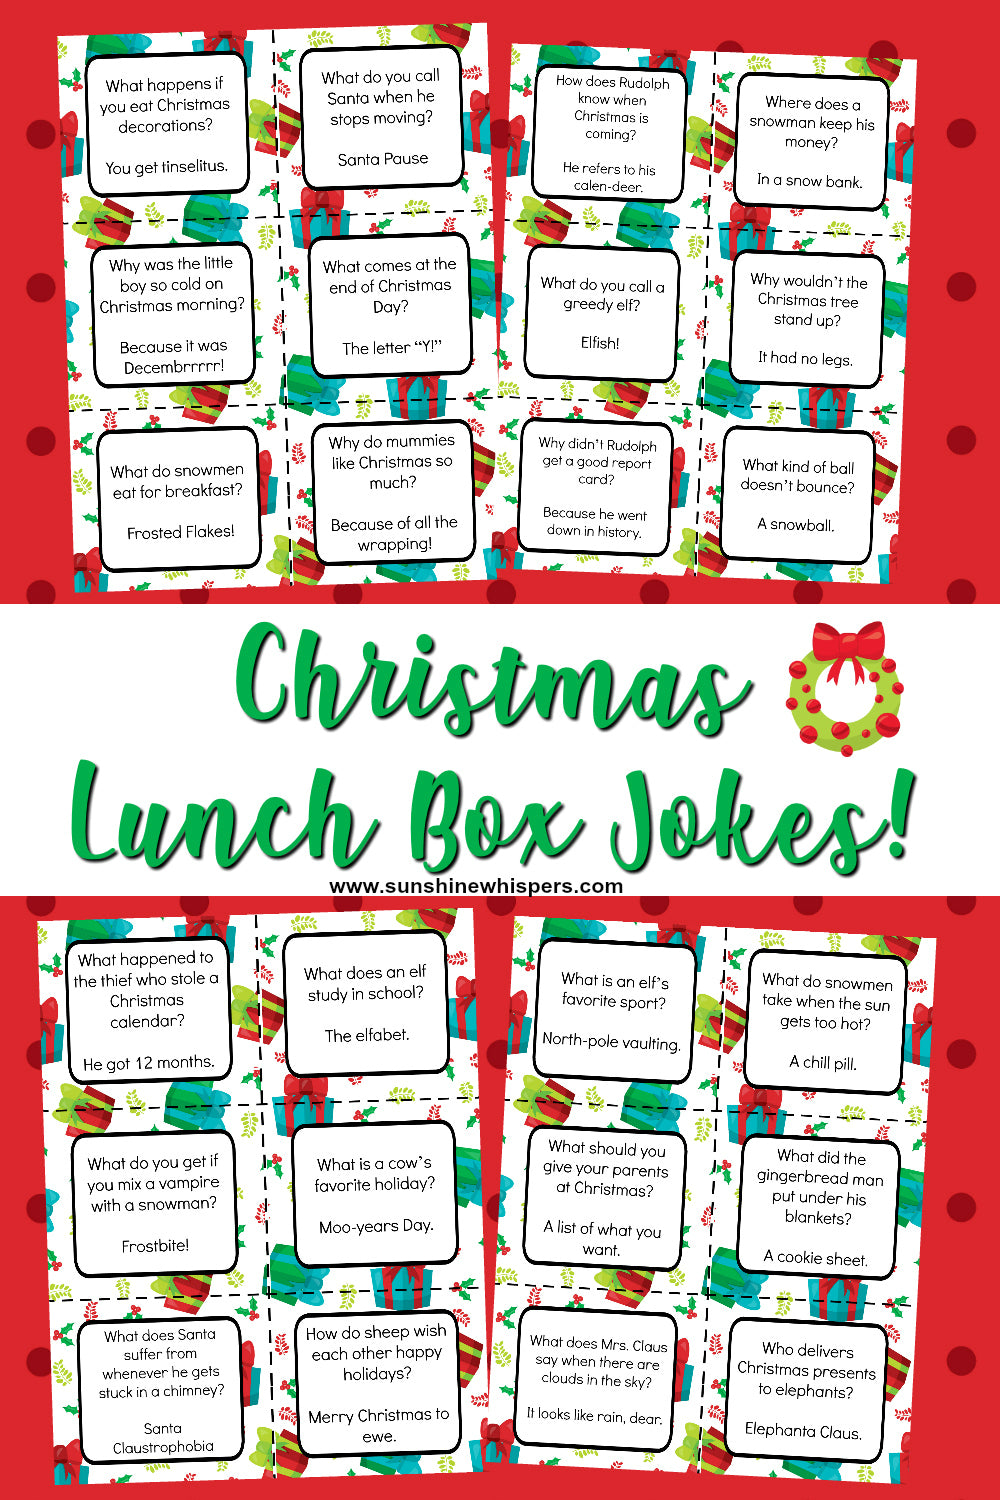 Christmas Lunch Box Jokes!